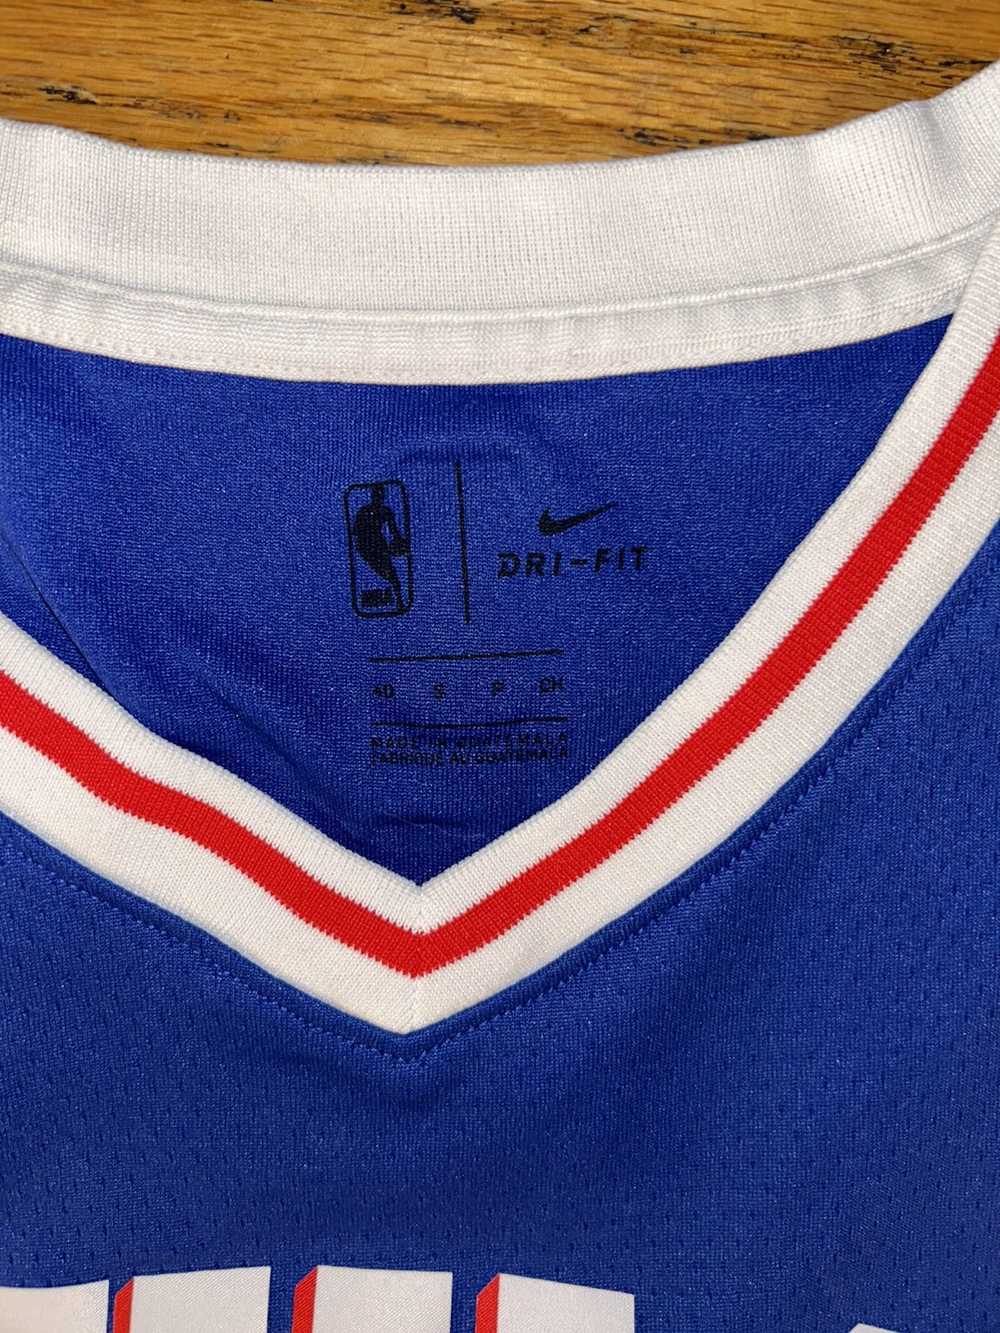 Nike Philadelphia 76ers Ben Simmons jersey - image 2